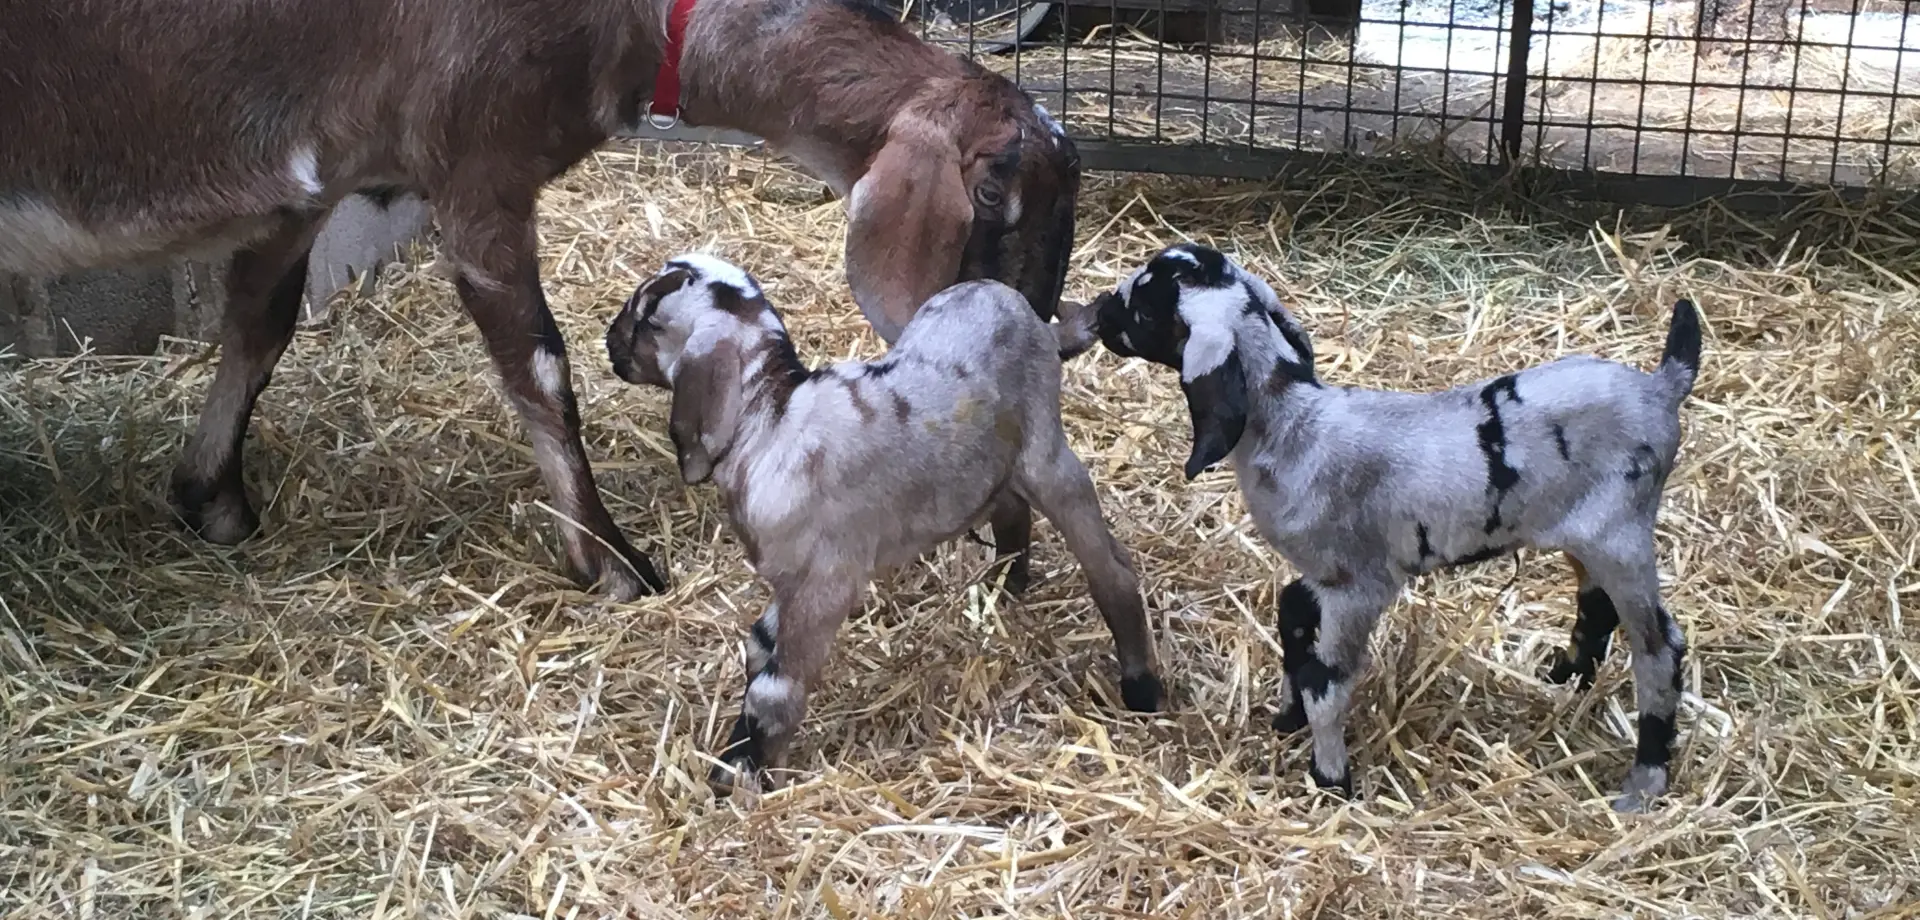 Goat kid feeding experience